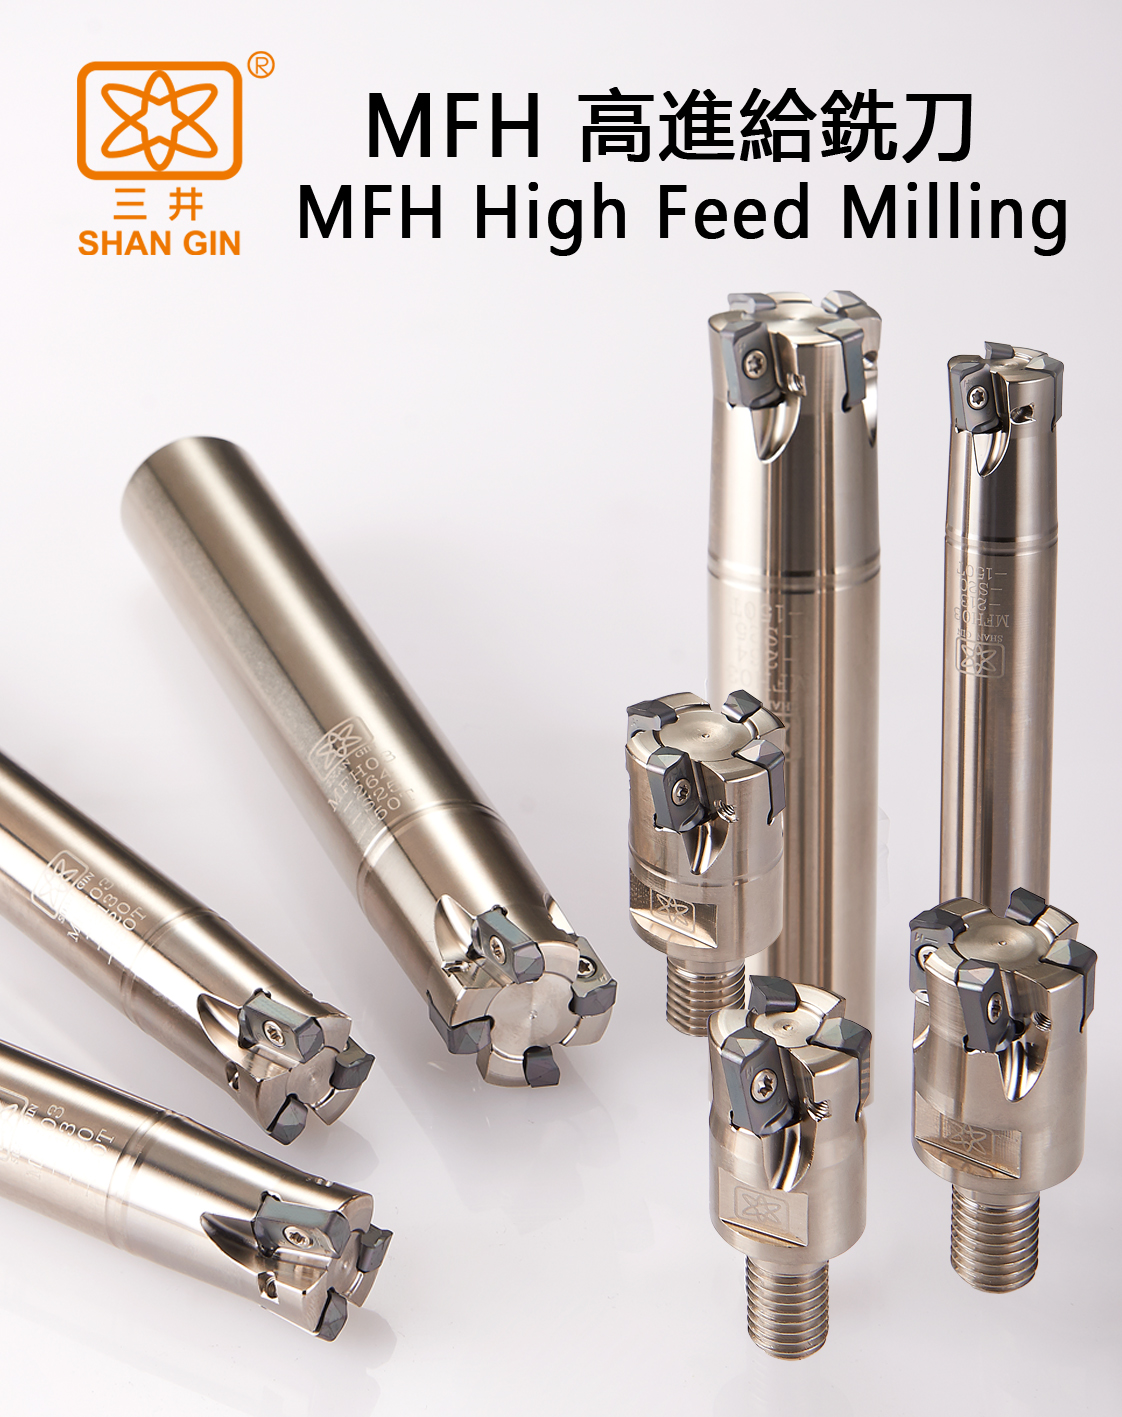 MFH High Feed Milling